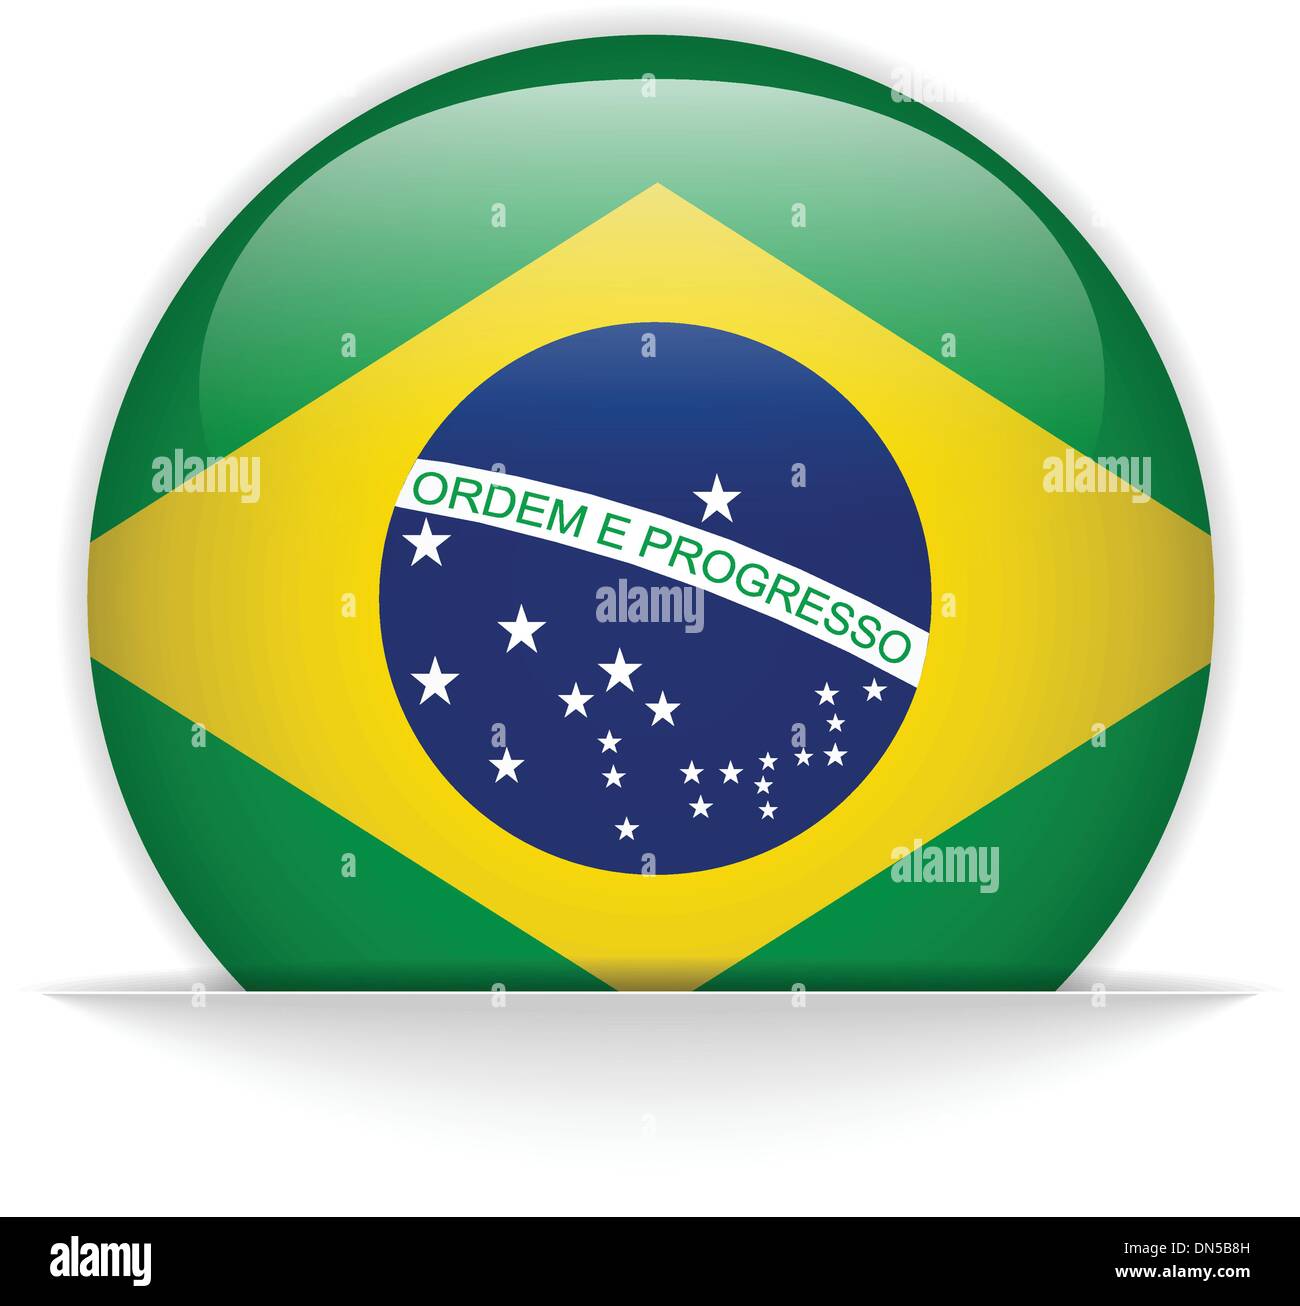 Brazil flag circle Stock Vector Images - Alamy